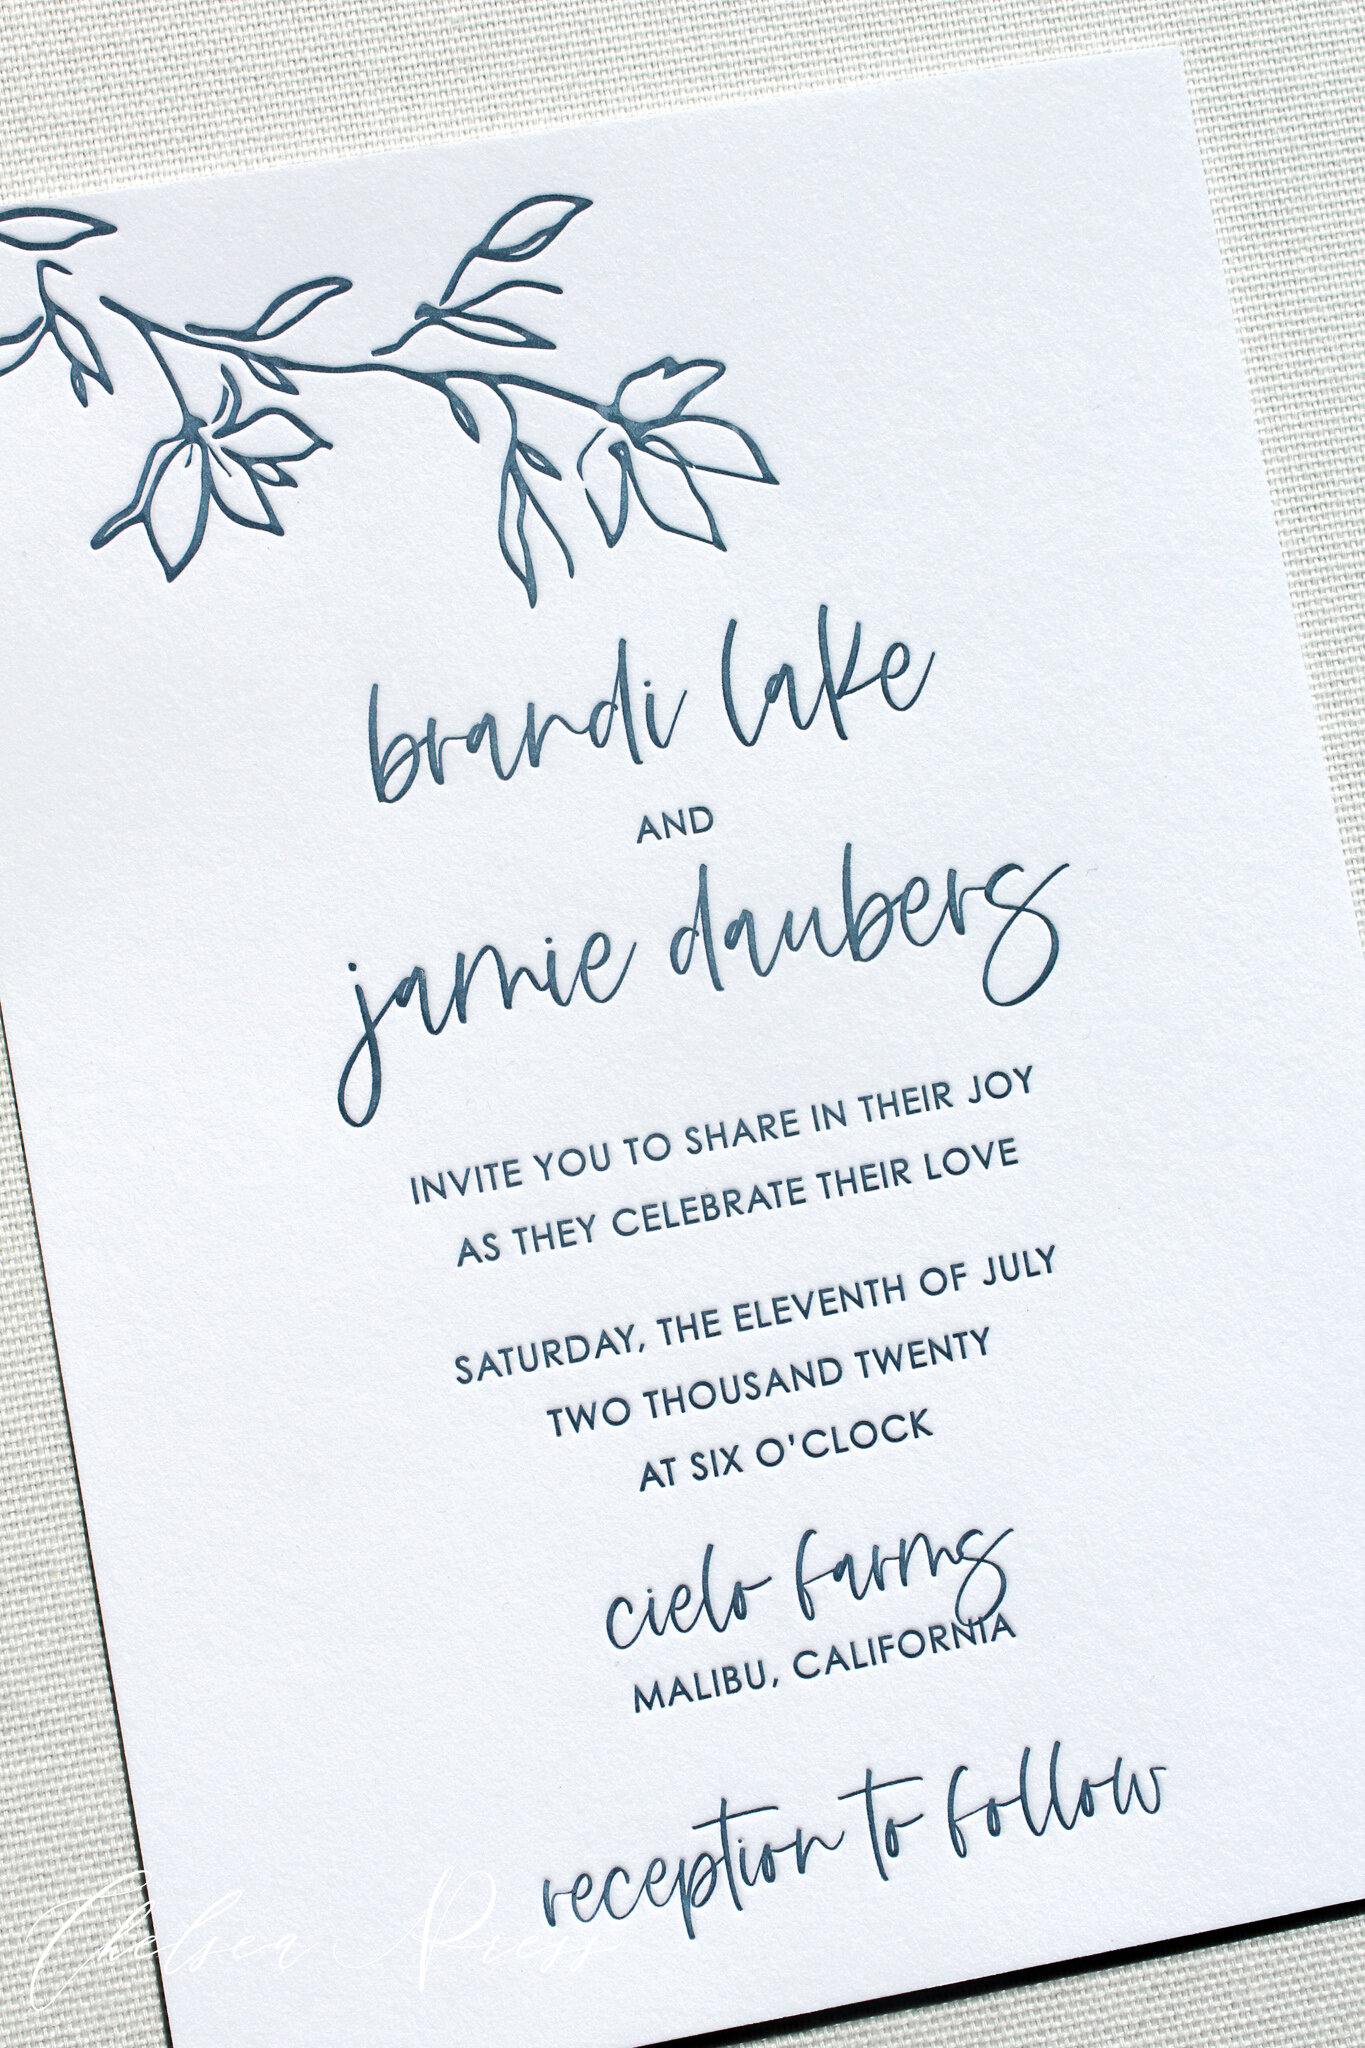 Chelsea Press Invitations-Brandi and Jamie wedding invitation.jpg